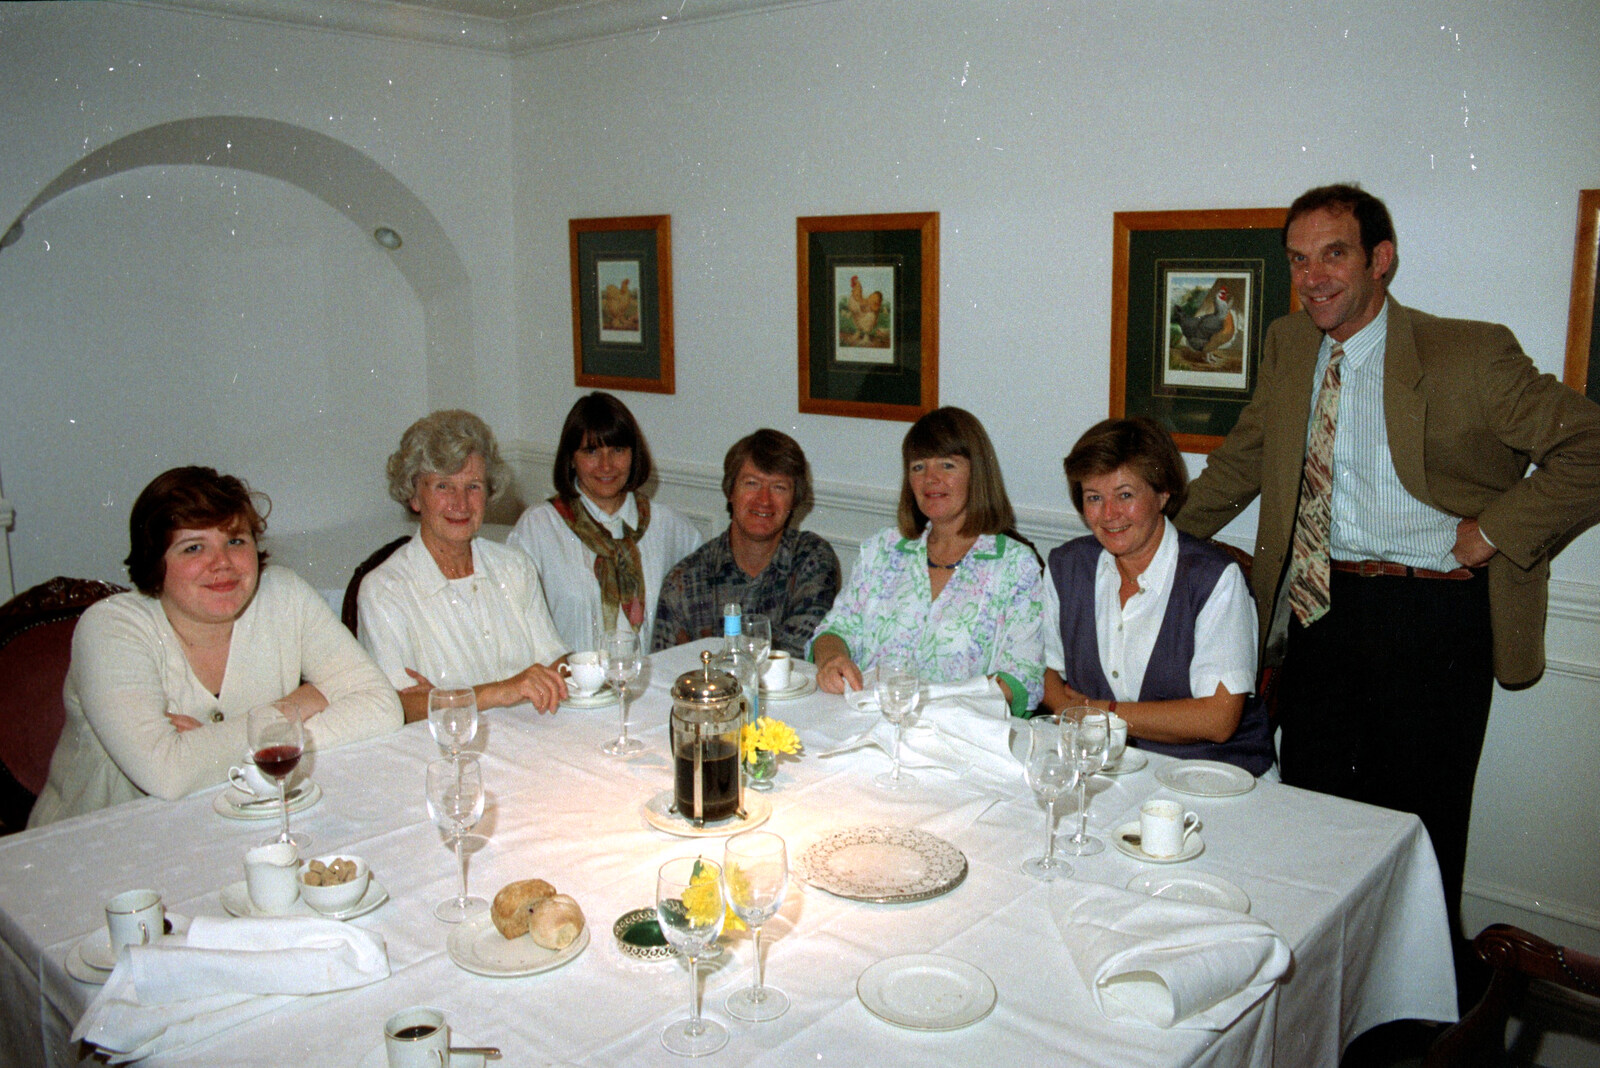 Sis, Grandmother, Mother et al from Grandmother's Seventieth Birthday, Brockenhurst and Keyhaven, Hampshire - 11th September 1994